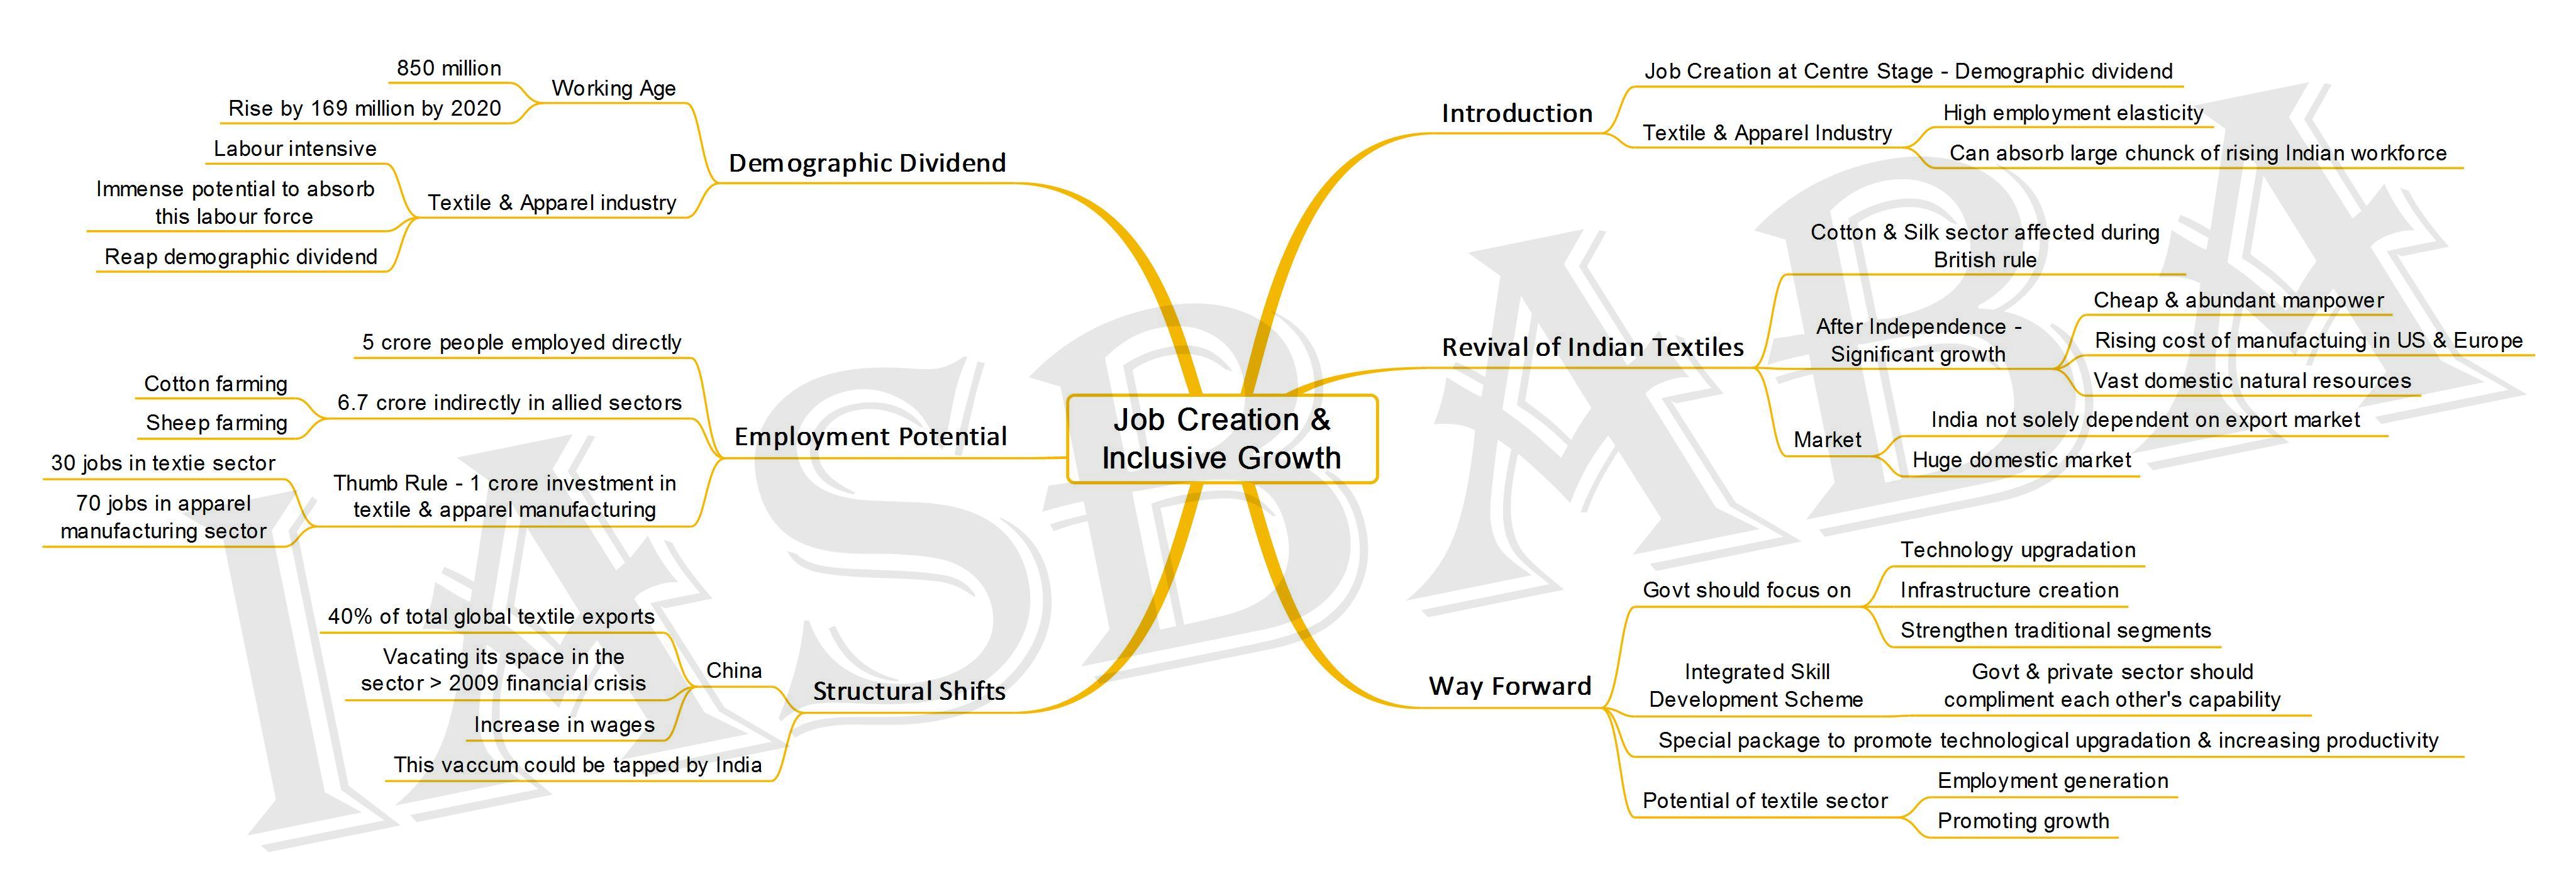 job-creation-inclusive-growth-iasbaba